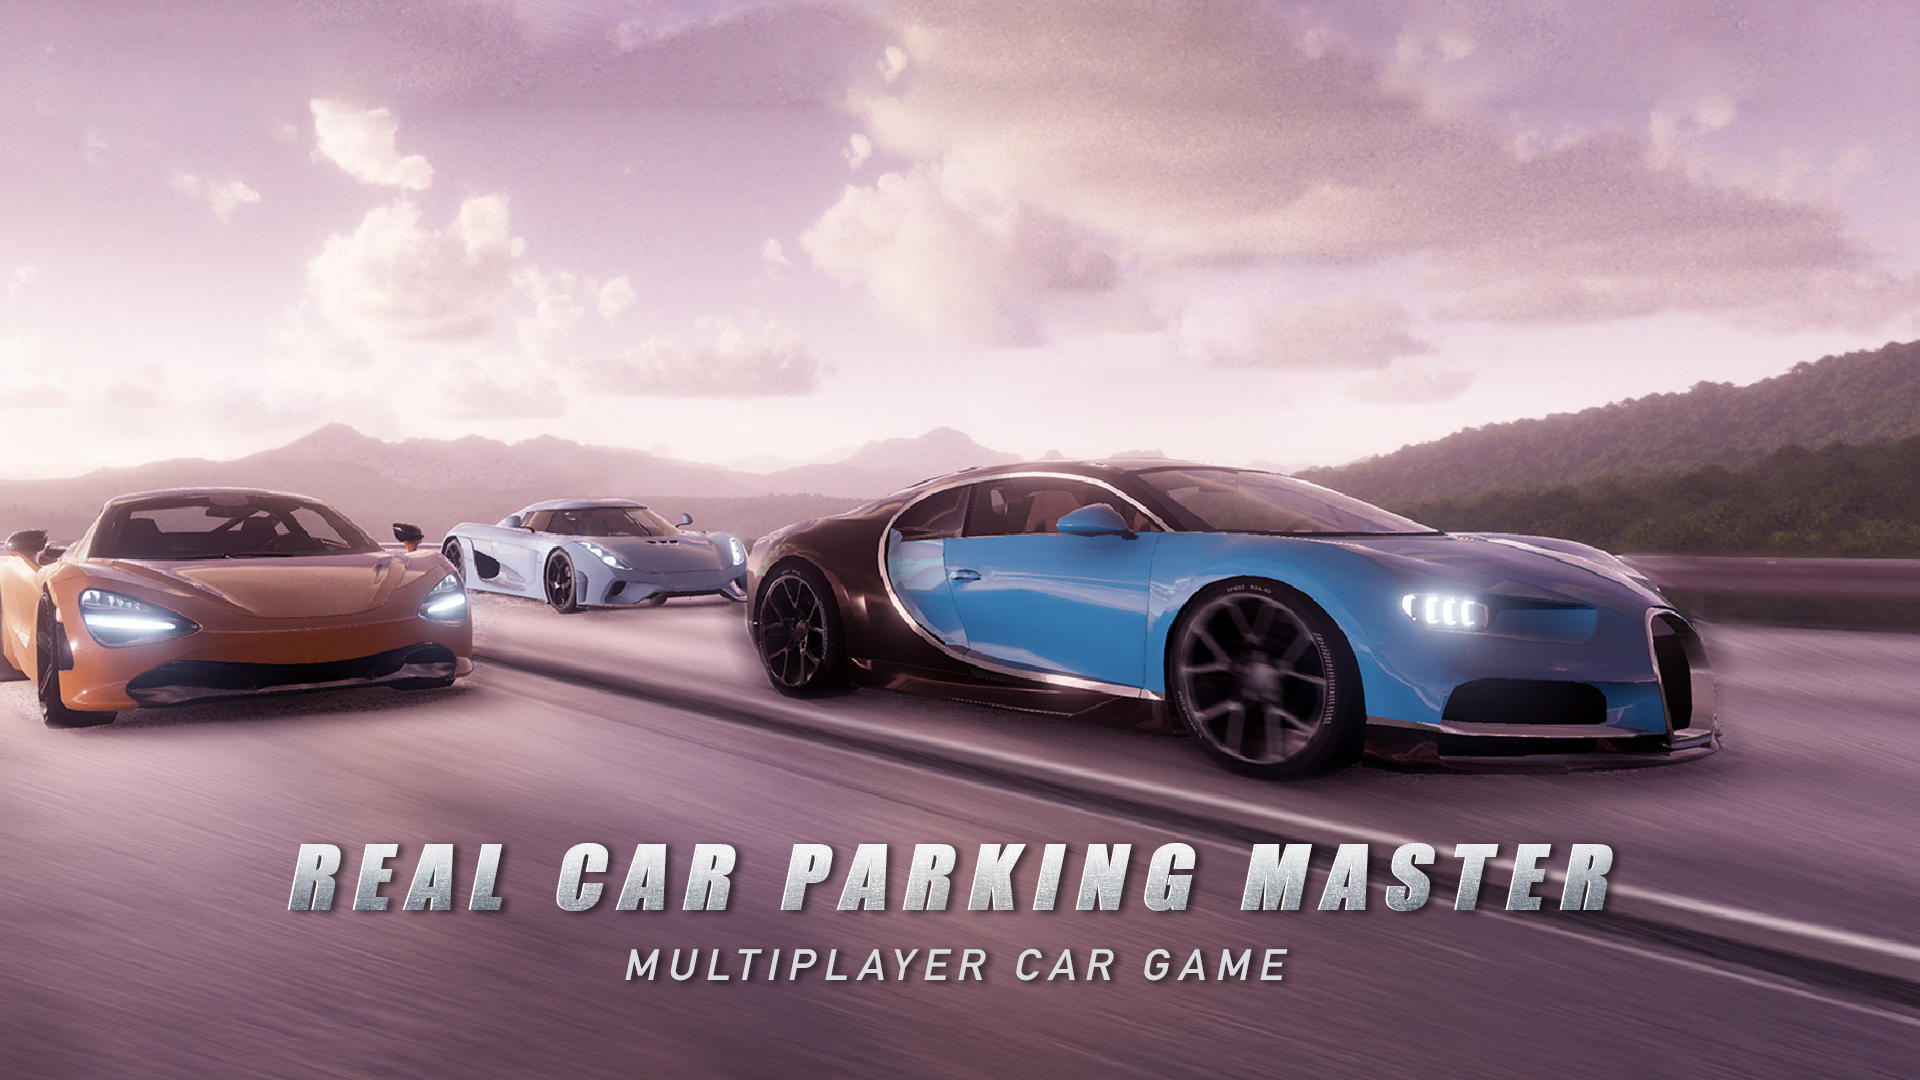 Parking Master Multiplayer